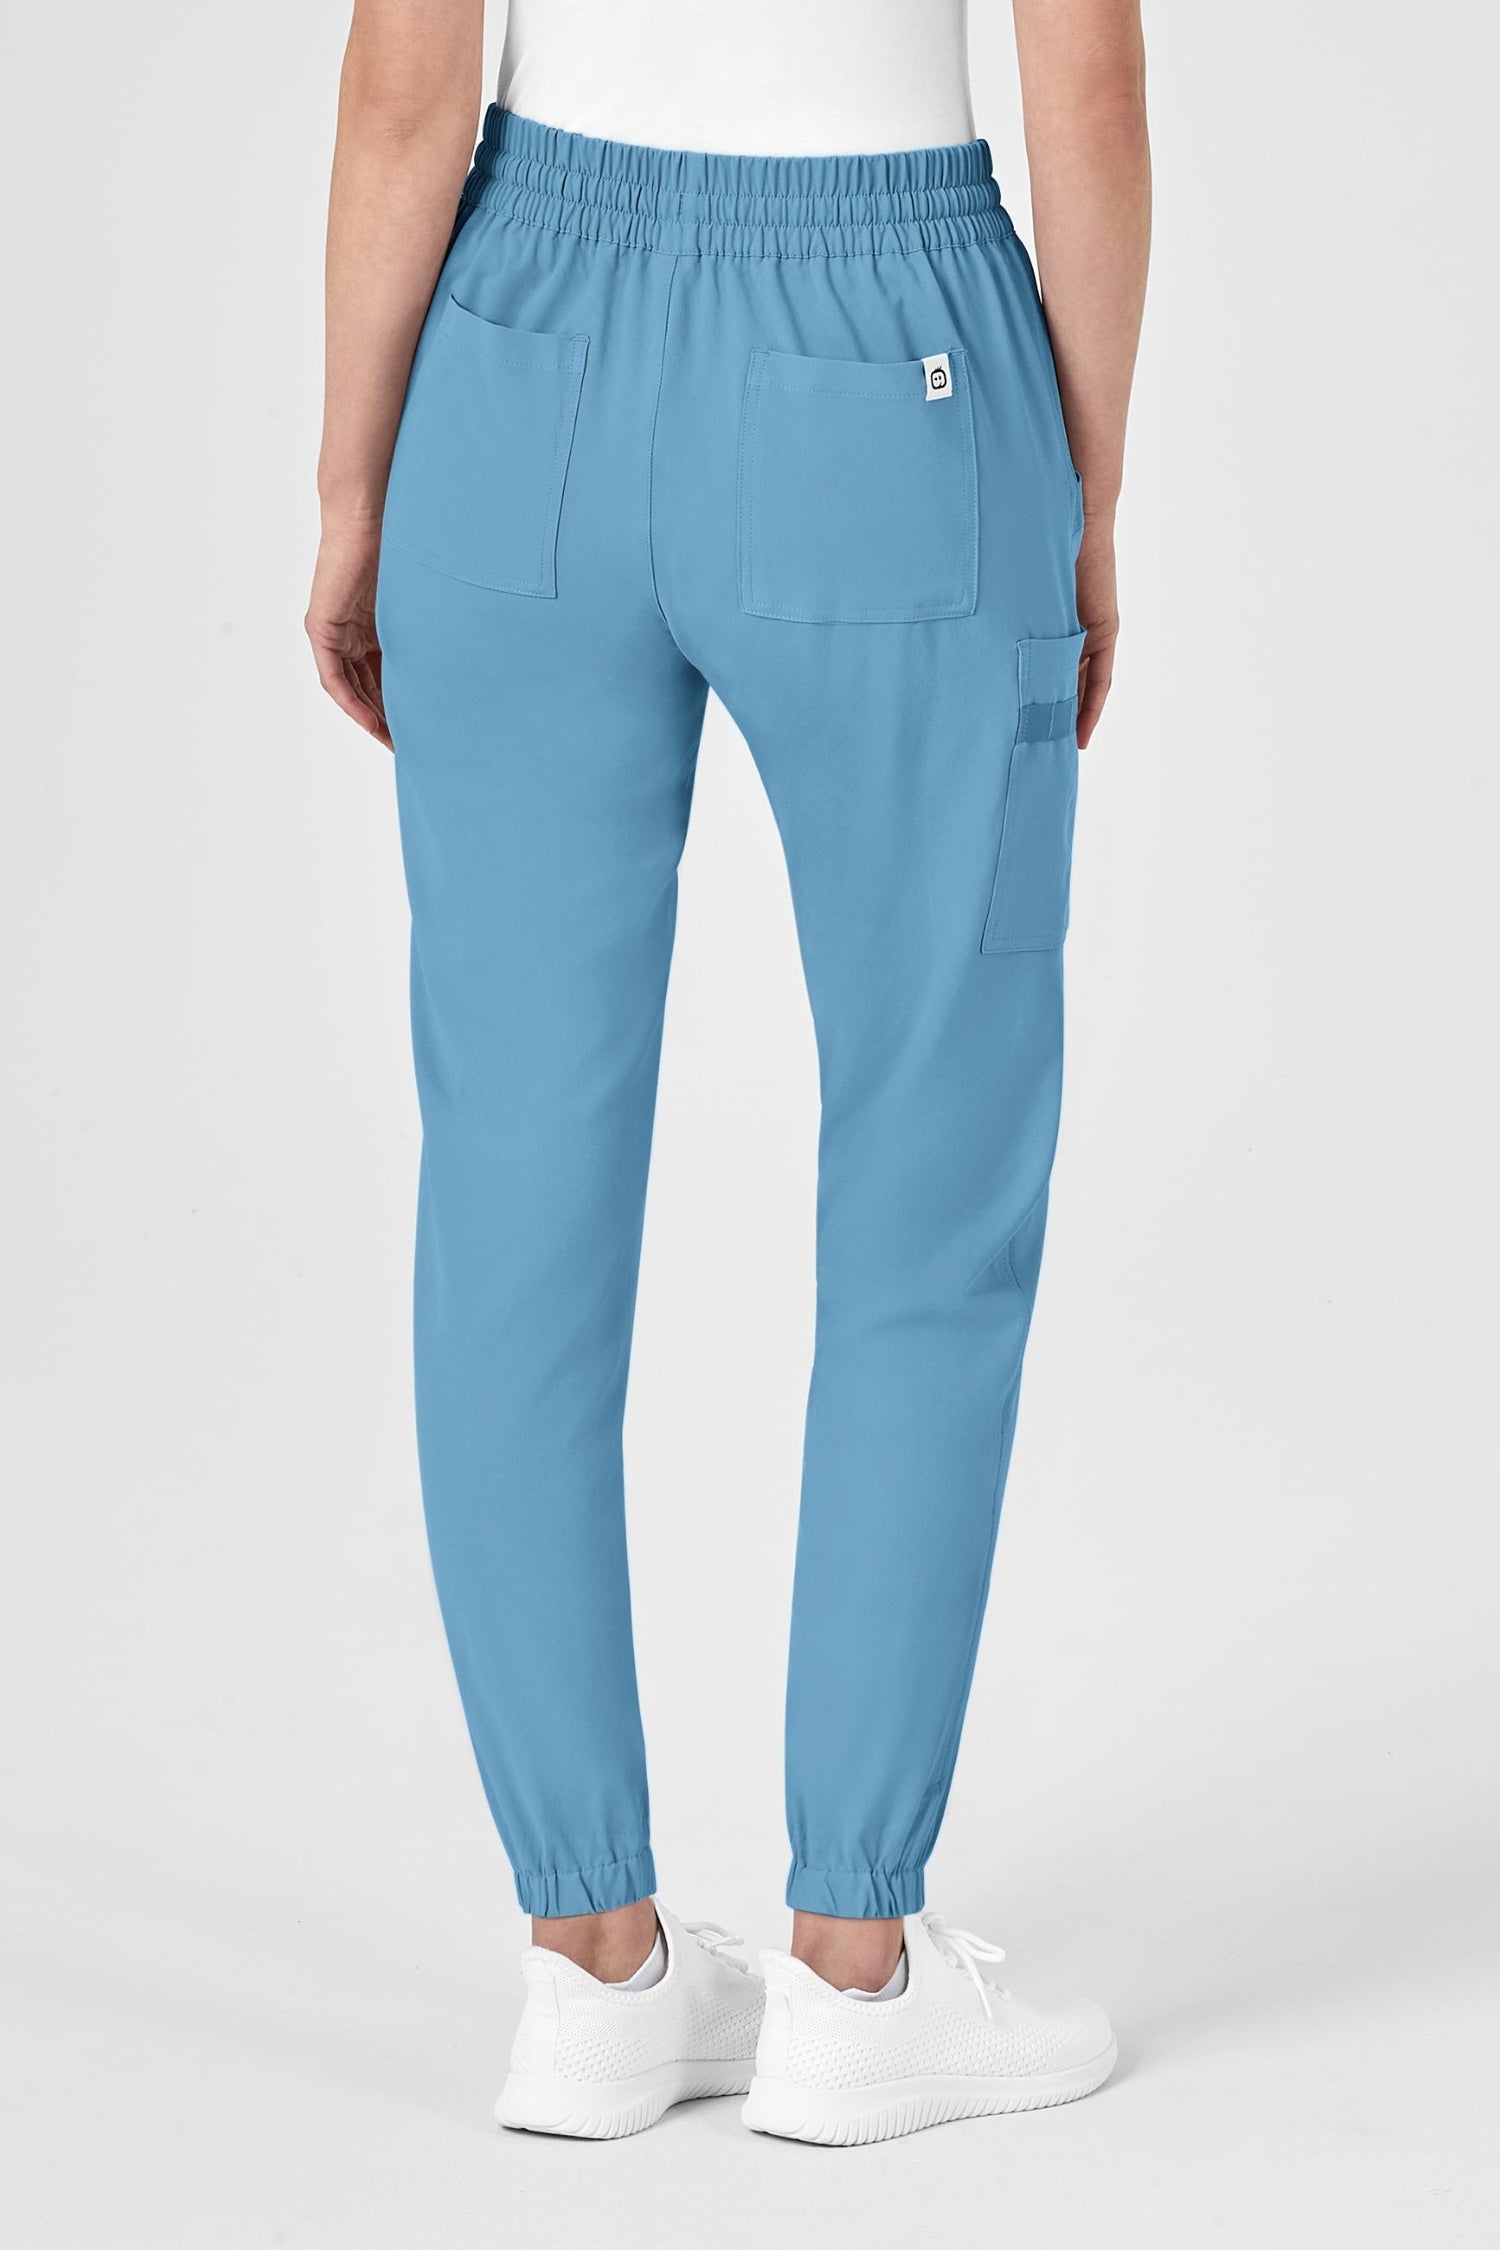 Pantalon médical femme The North Face avec poches cargo, coupe moderne - RENEW bleu